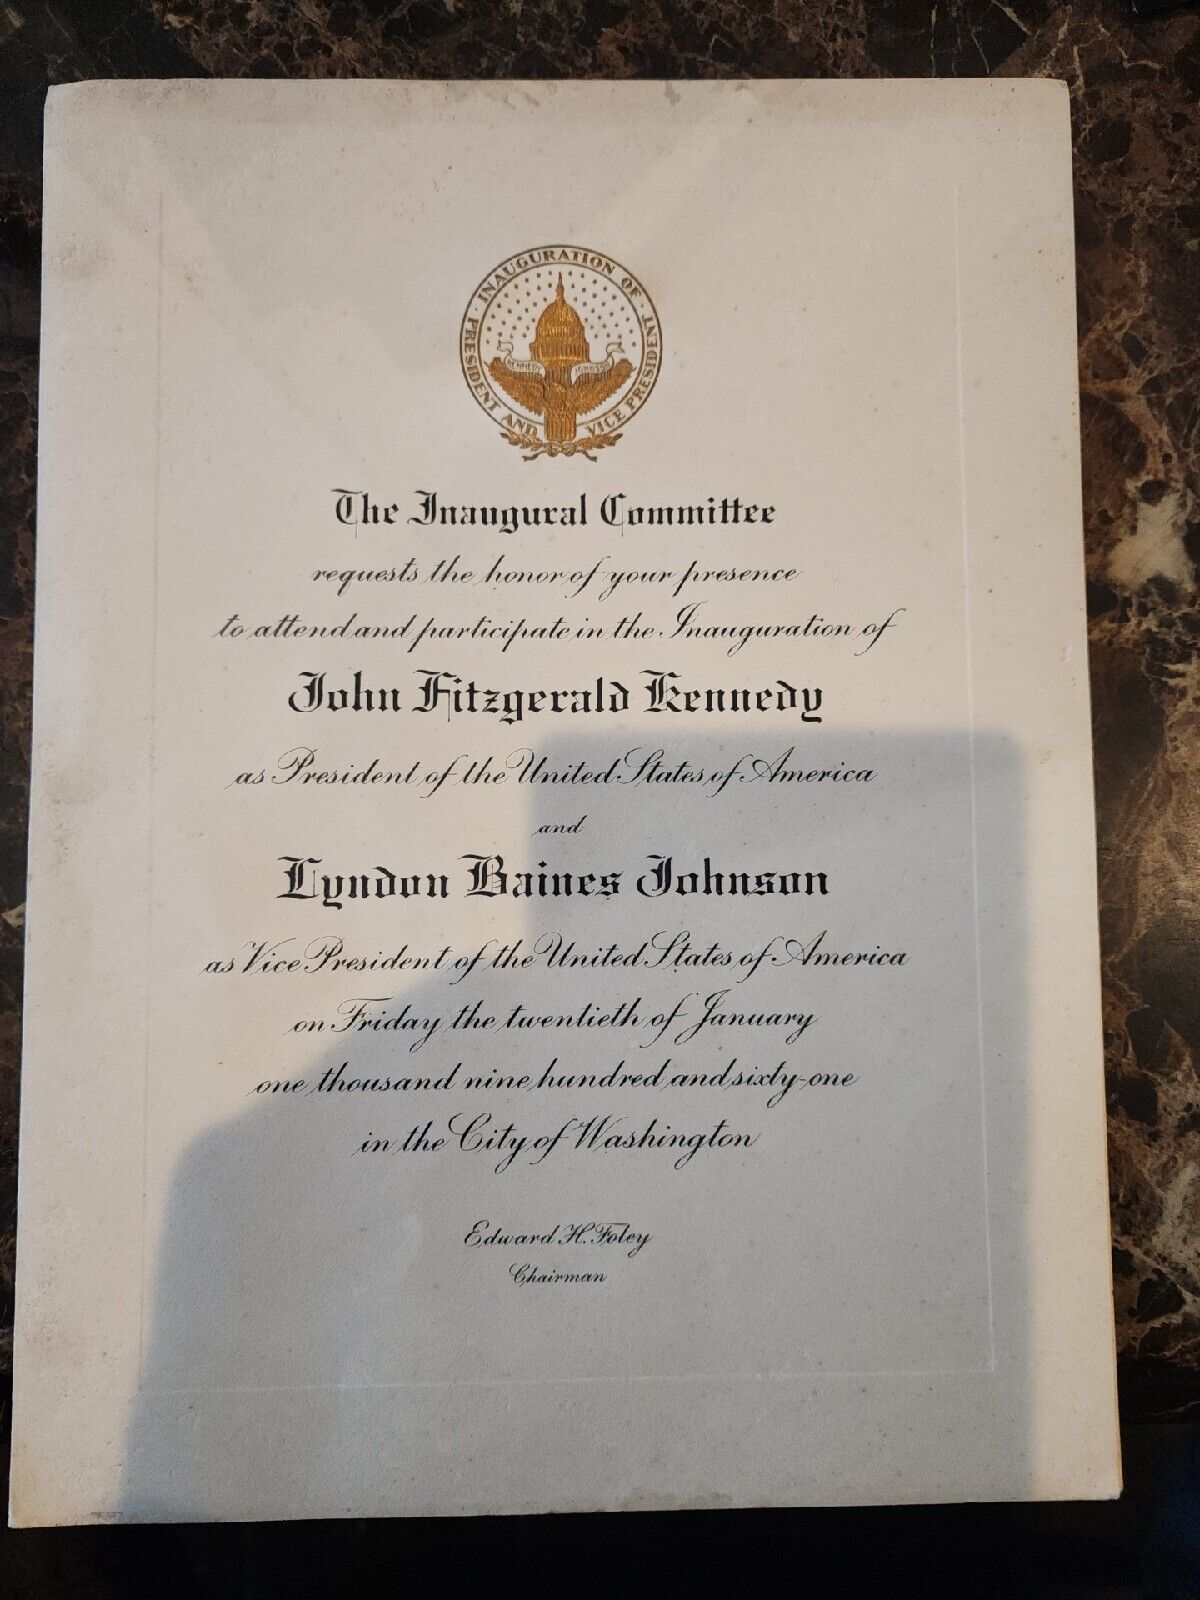 Original Inauguration invitation for John F Kennedy 1961